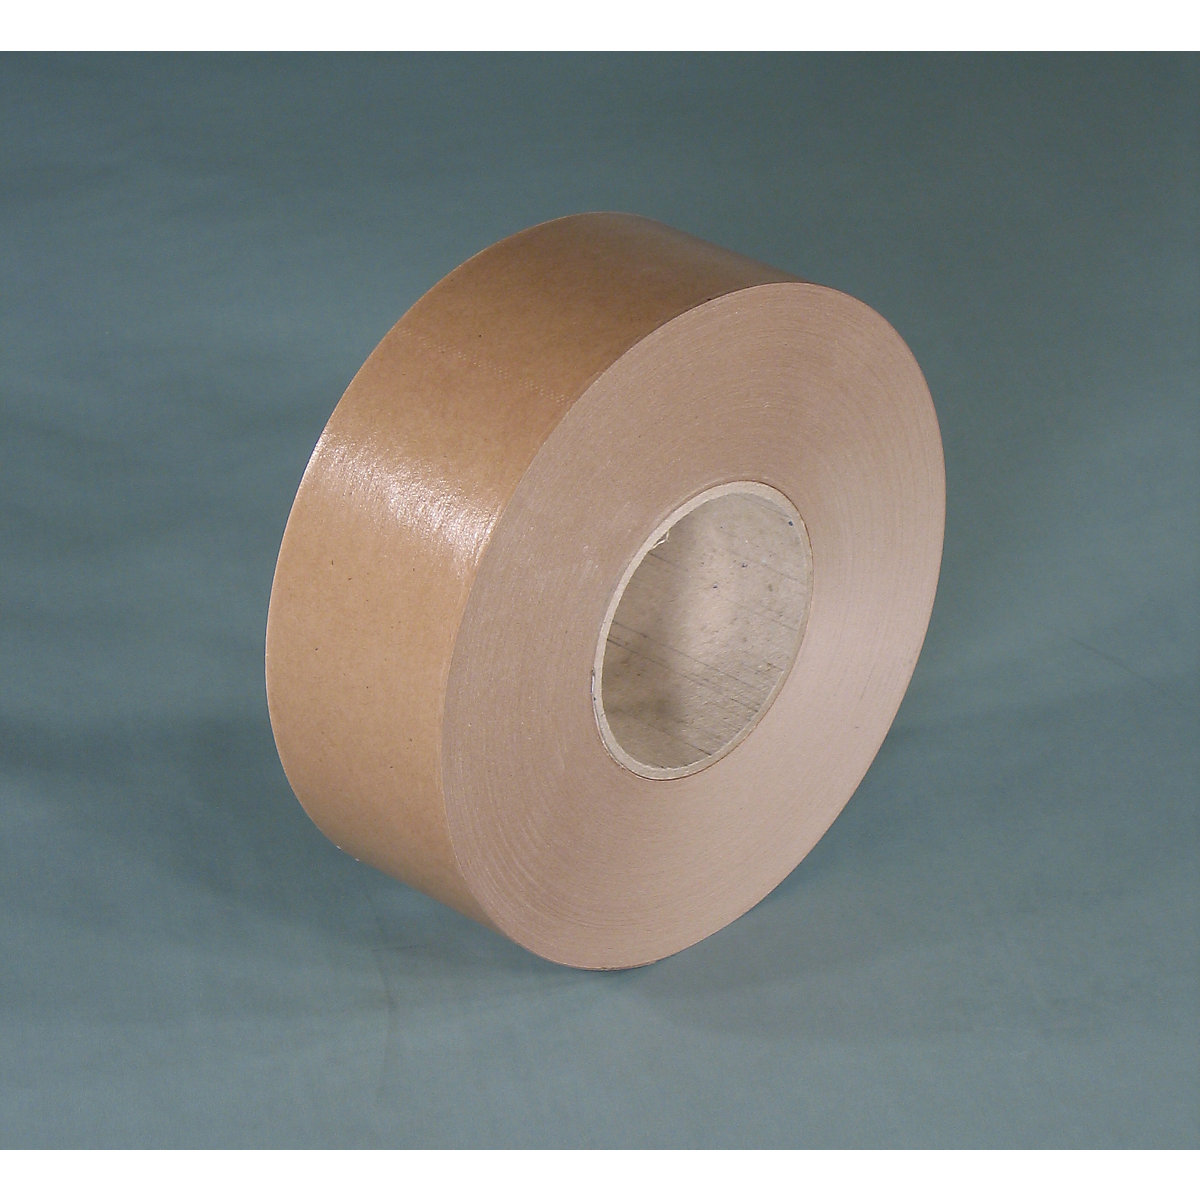 Cinta adhesiva en húmedo – eurokraft basic, modelo sencillo, UE 12 rollos, marrón, anchura de cinta 60 mm-2